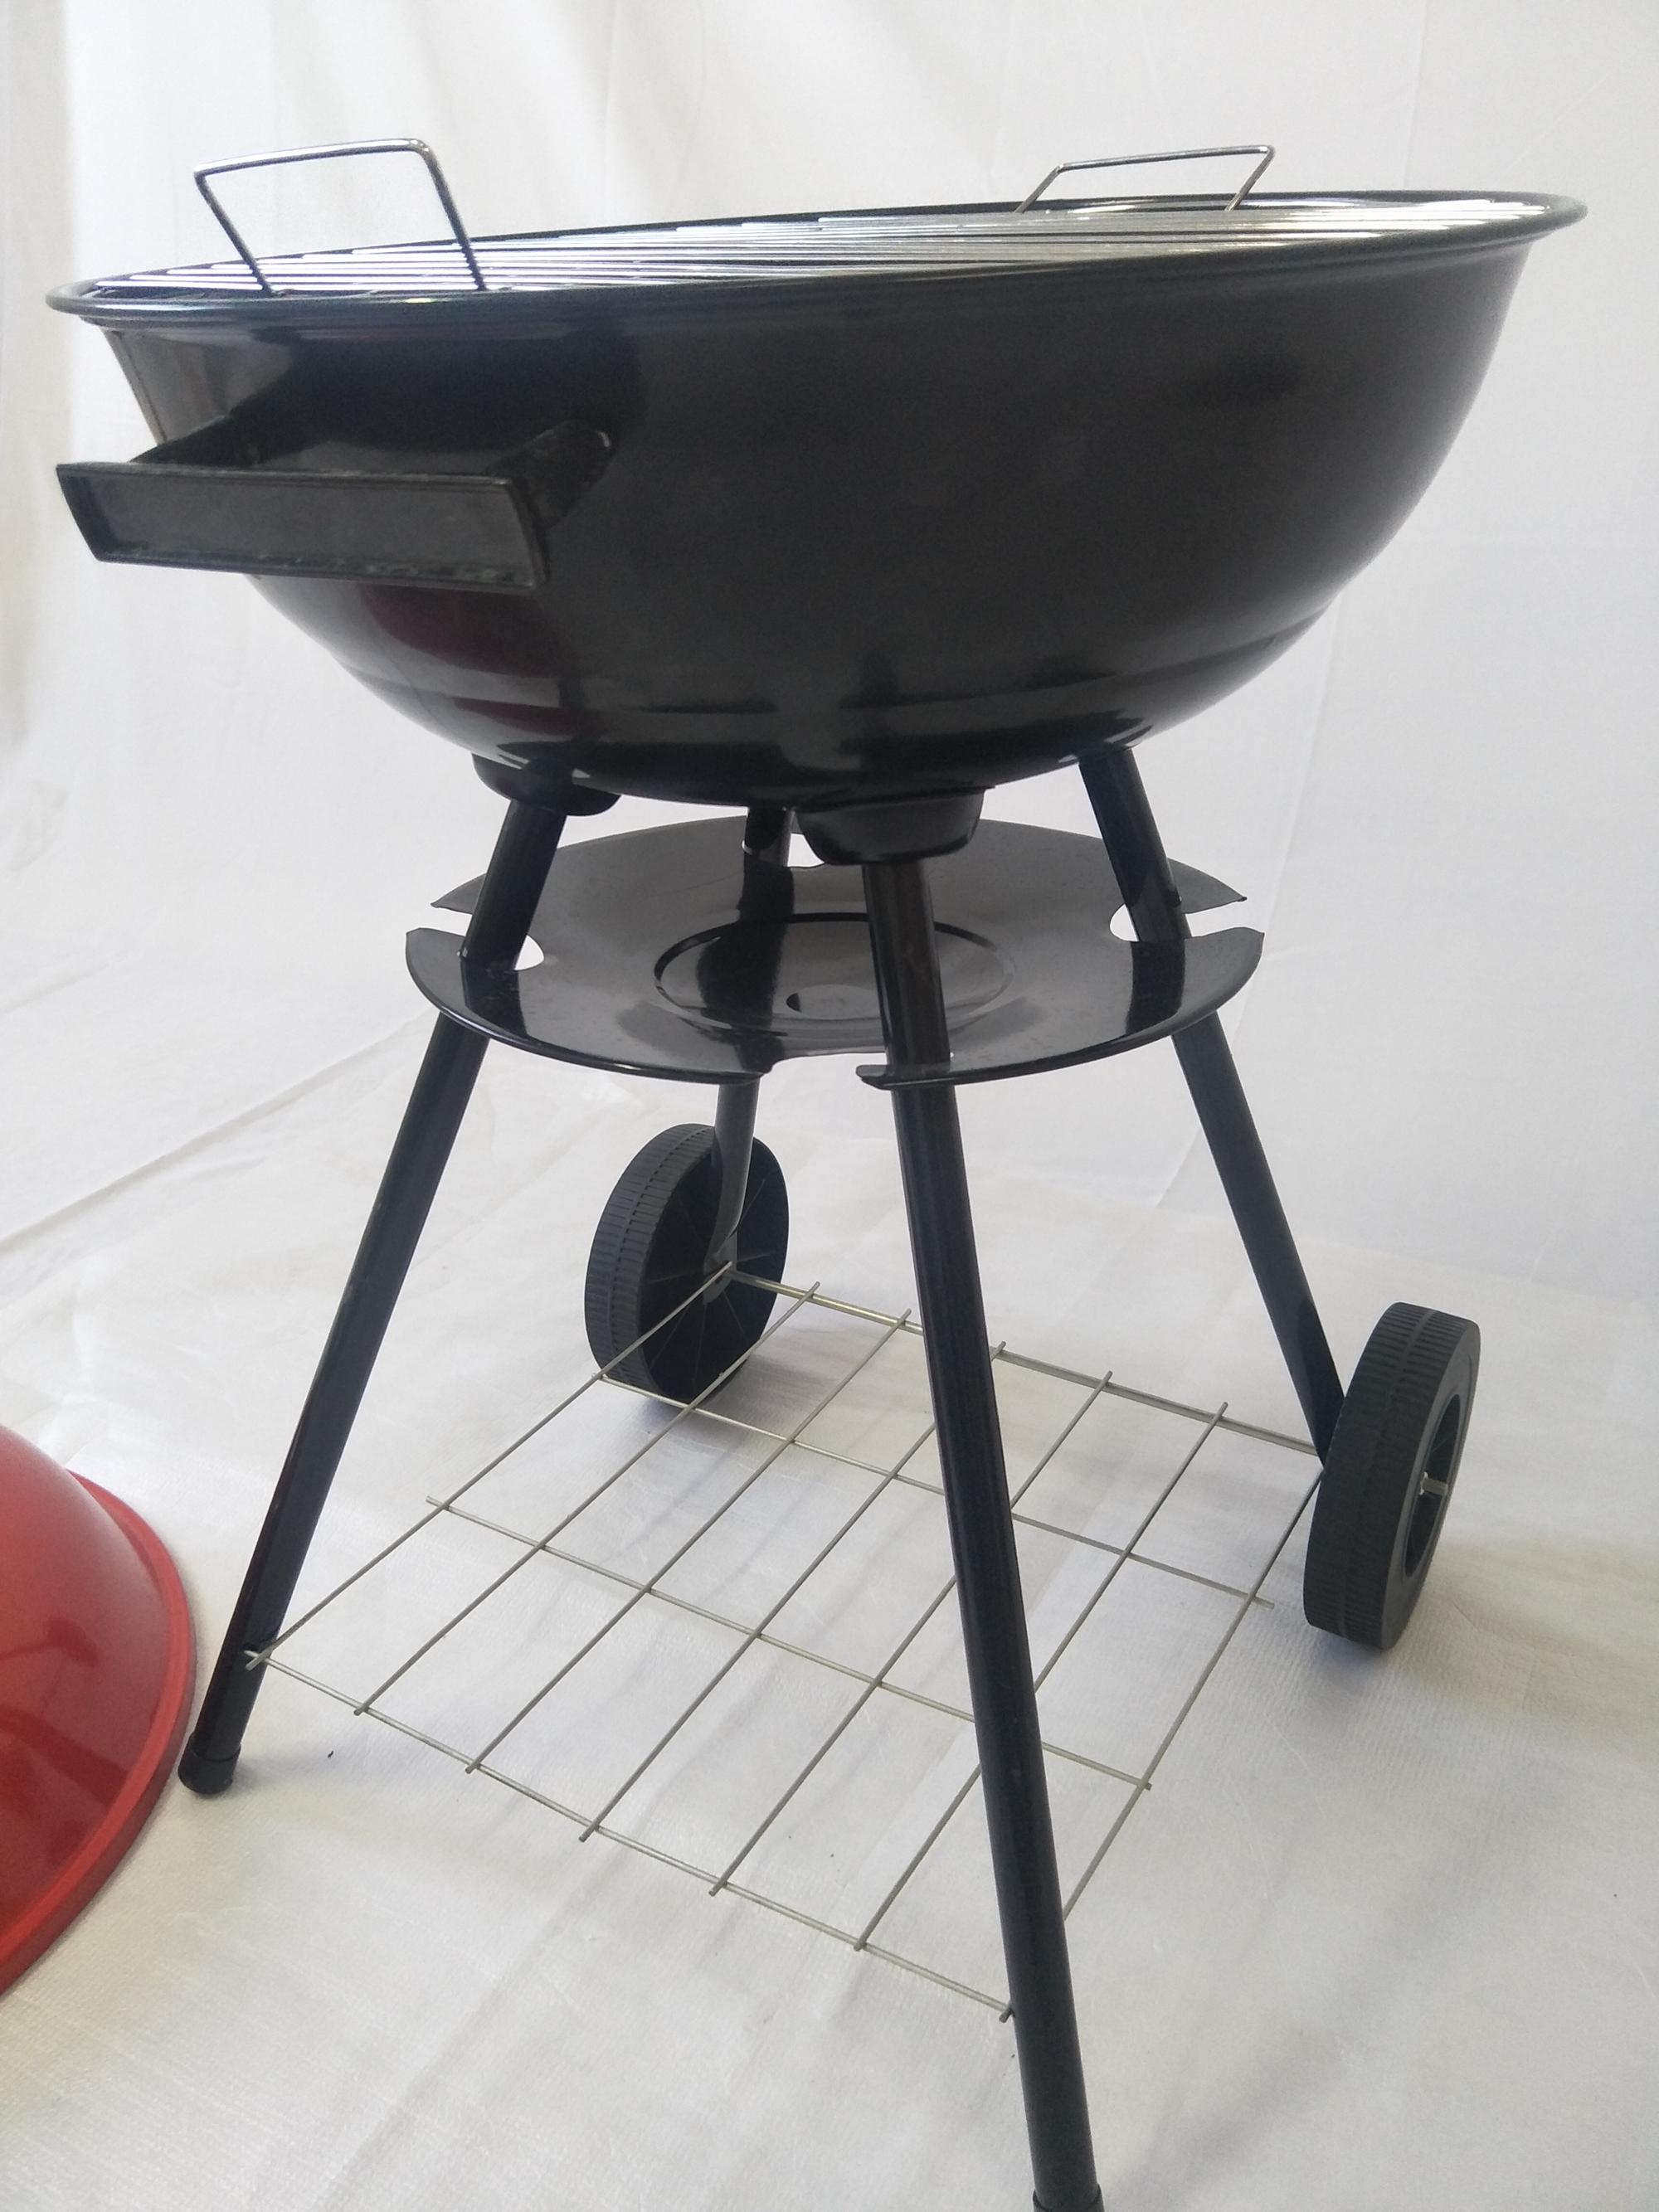 charcoal bbq grill